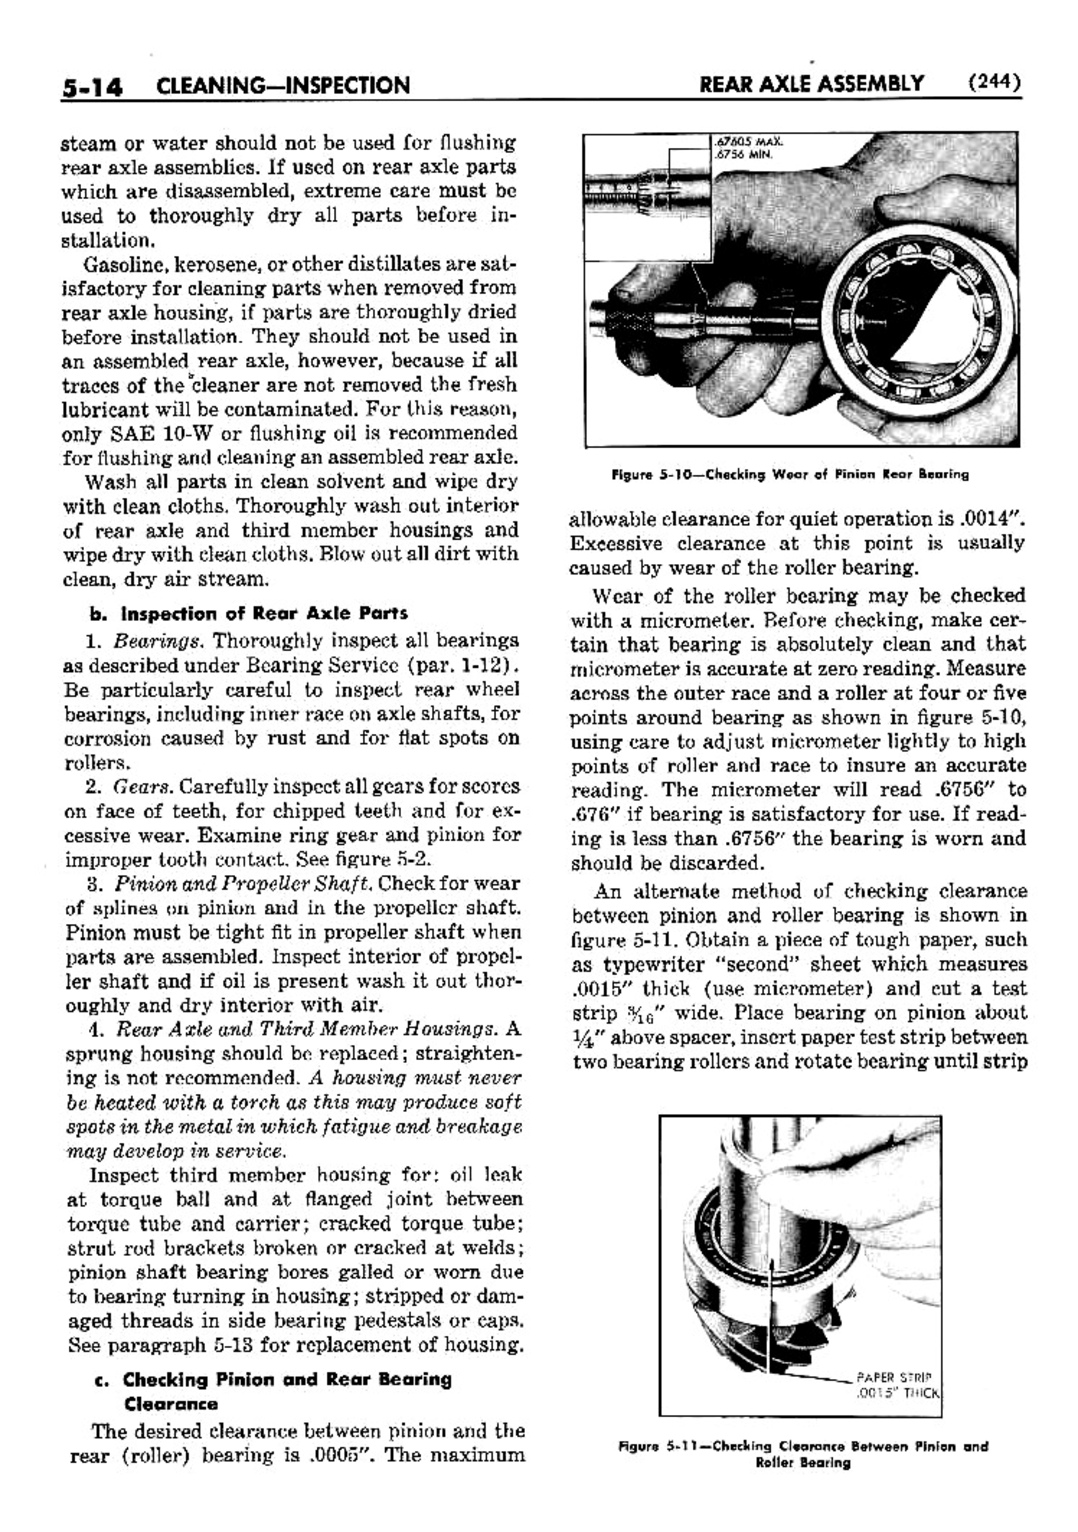 n_06 1952 Buick Shop Manual - Rear Axle-014-014.jpg